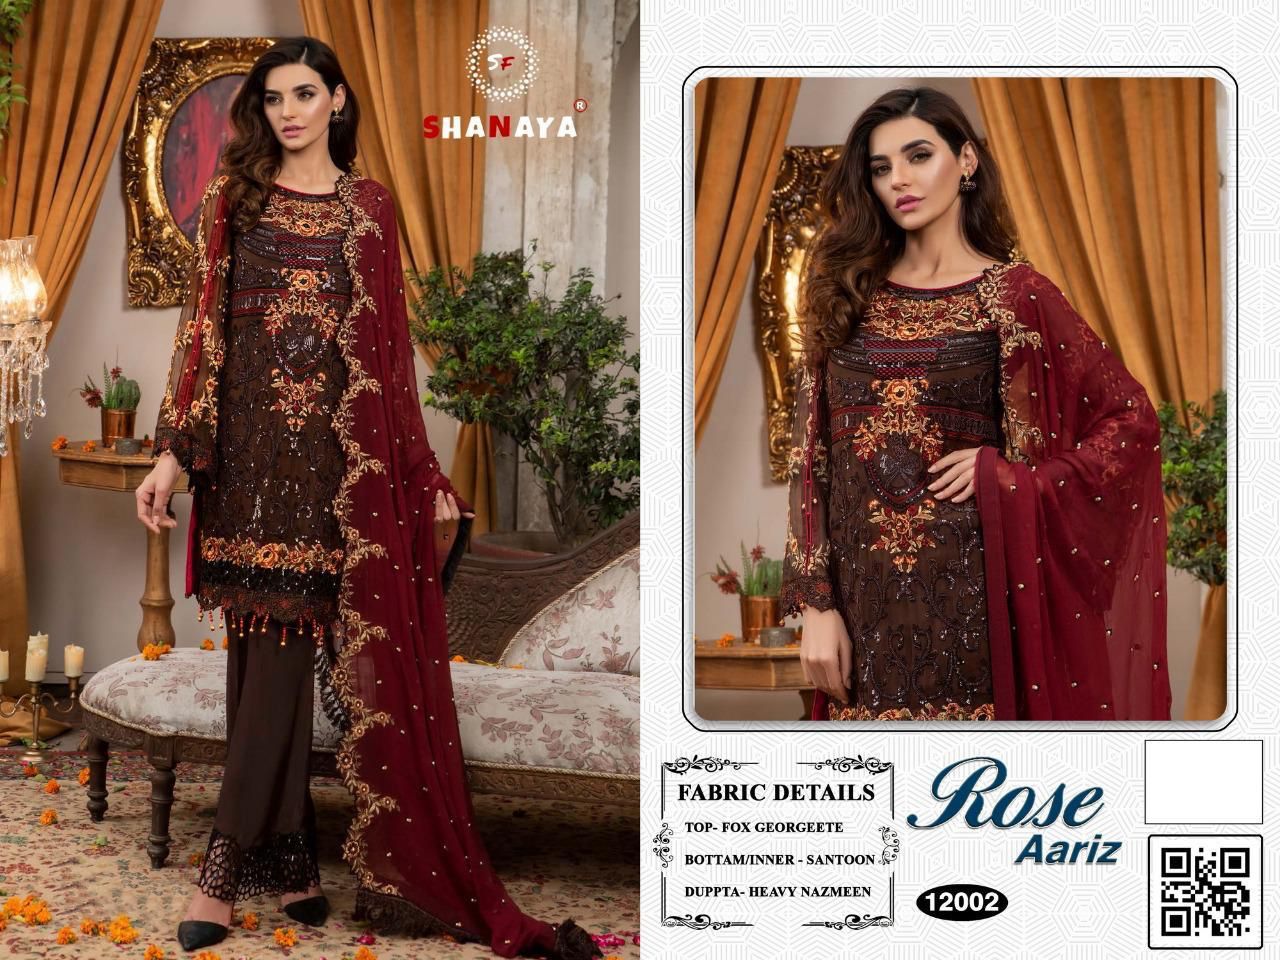 Shanaya Fashion Rose Aariz 12002